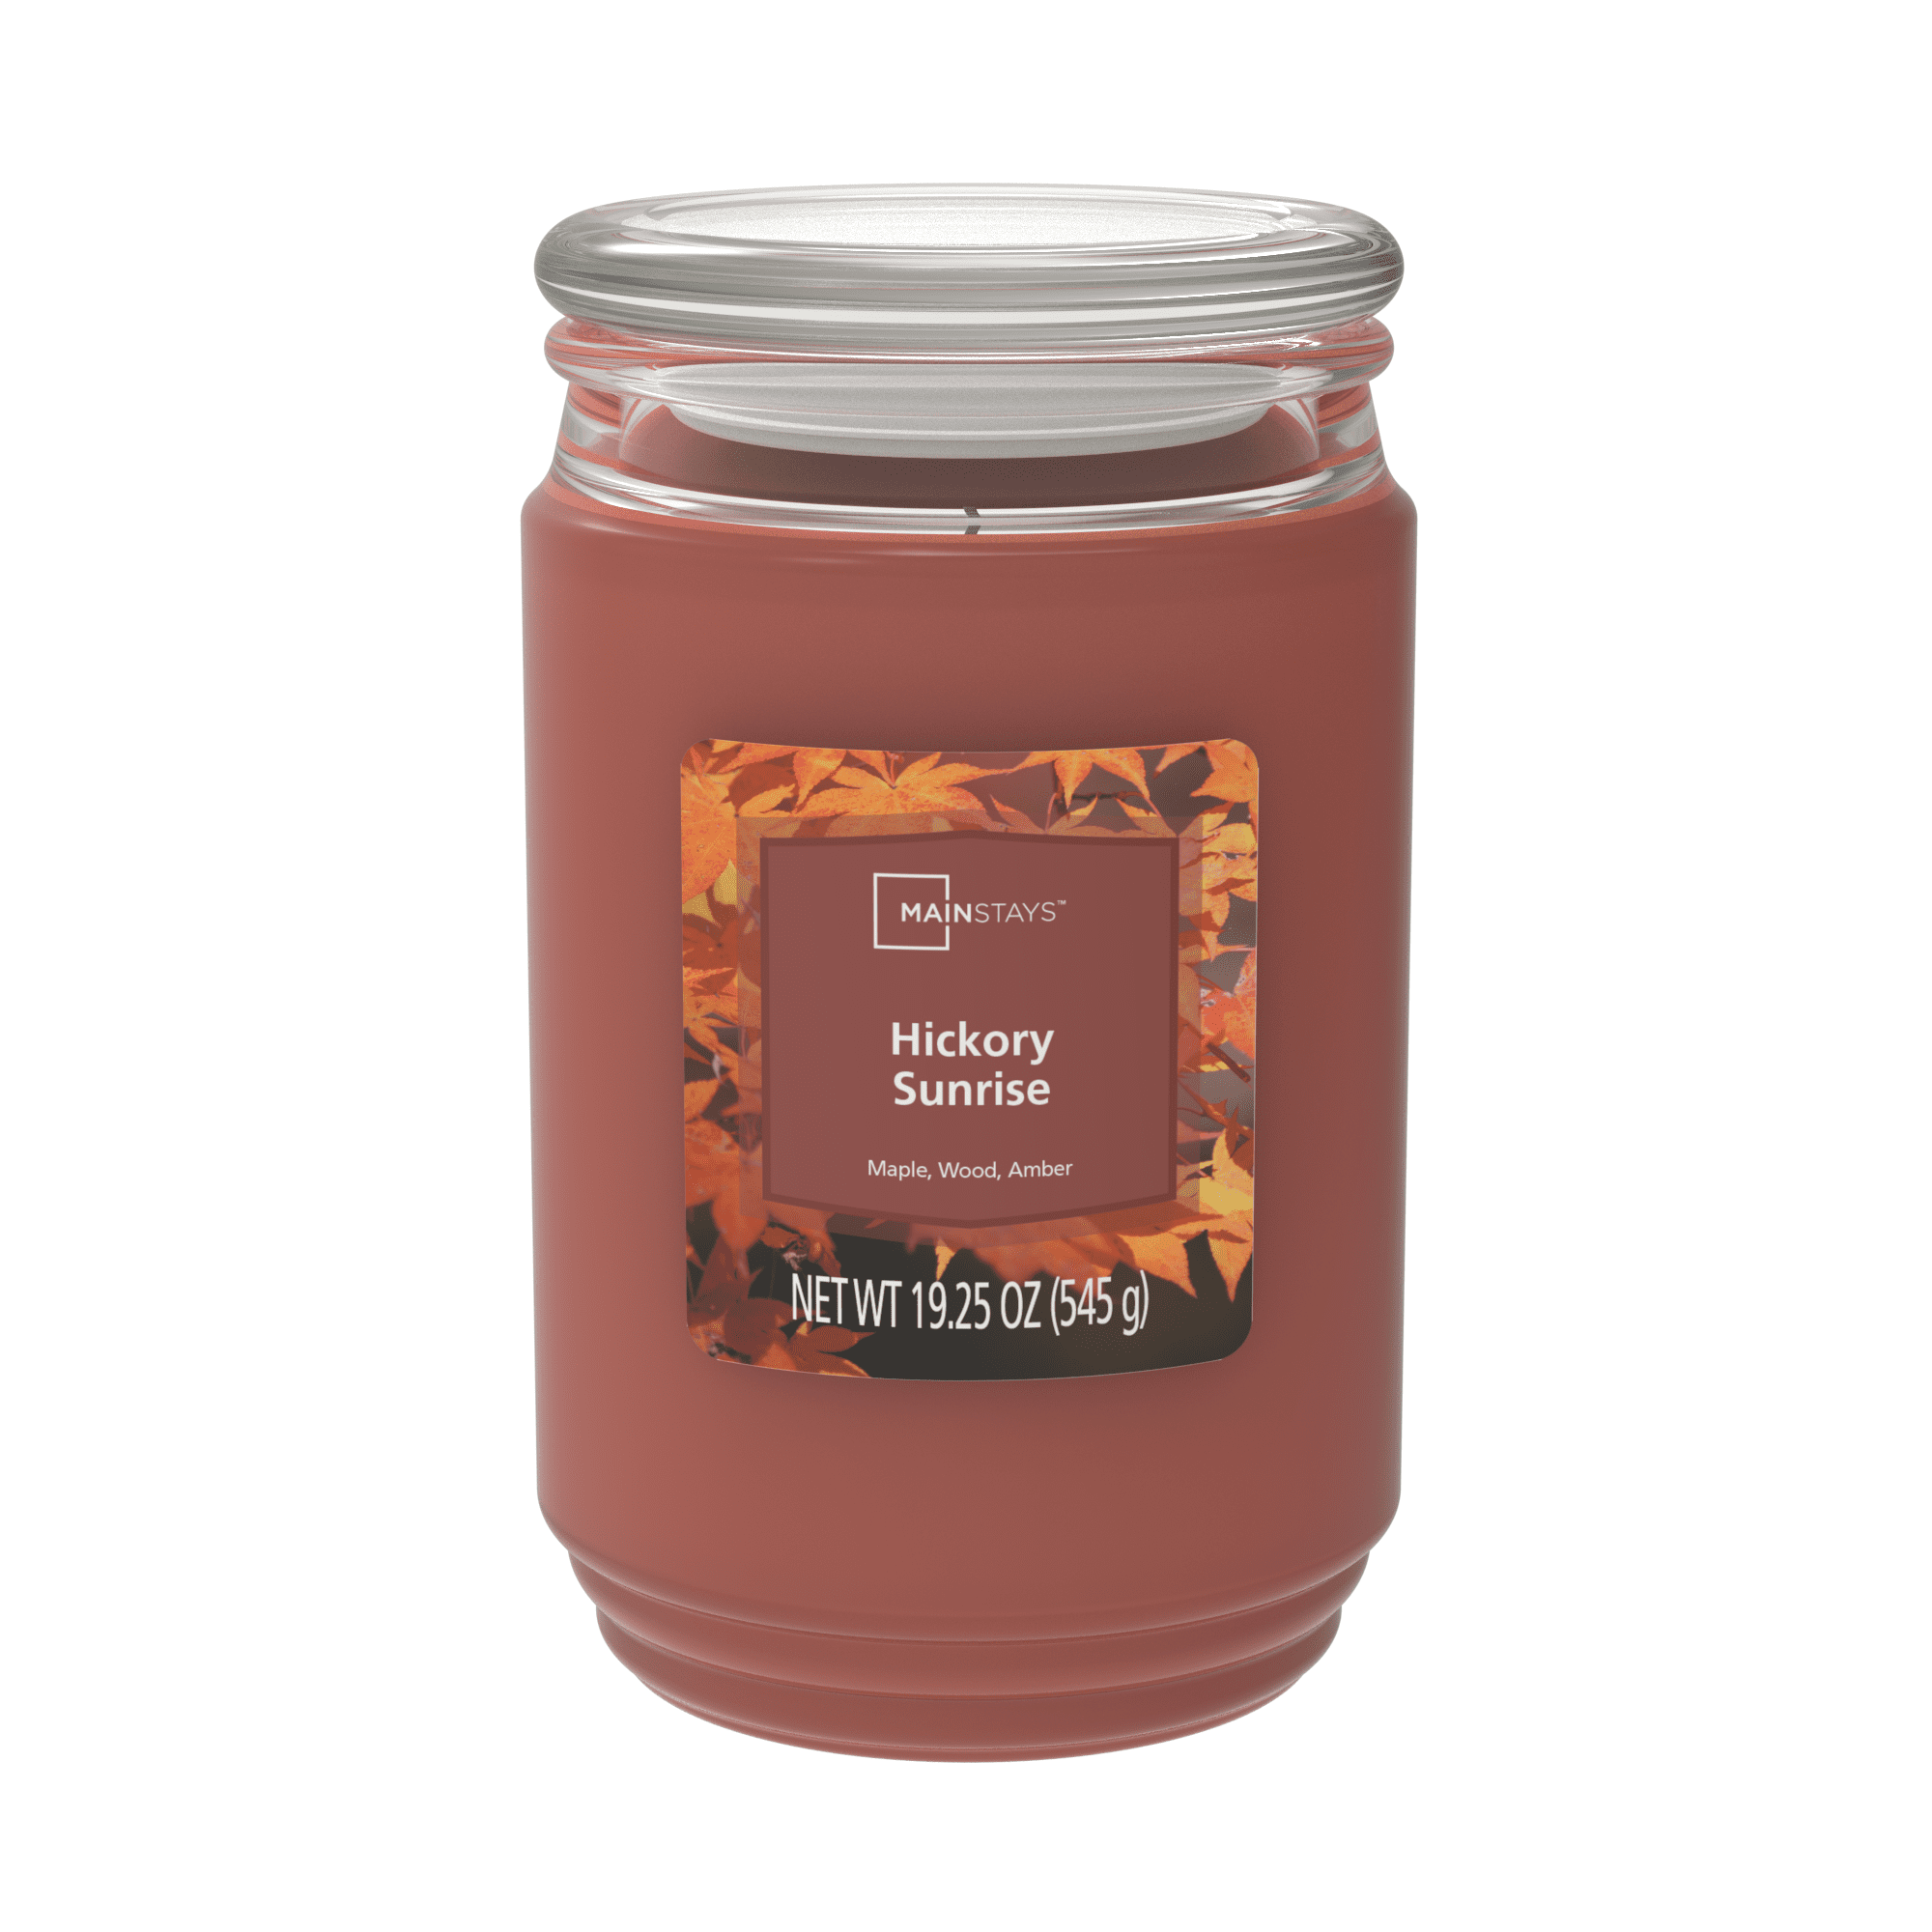 Mainstays Hickory Sunrise Single-Wick Glass Jar Candle, 20 oz.